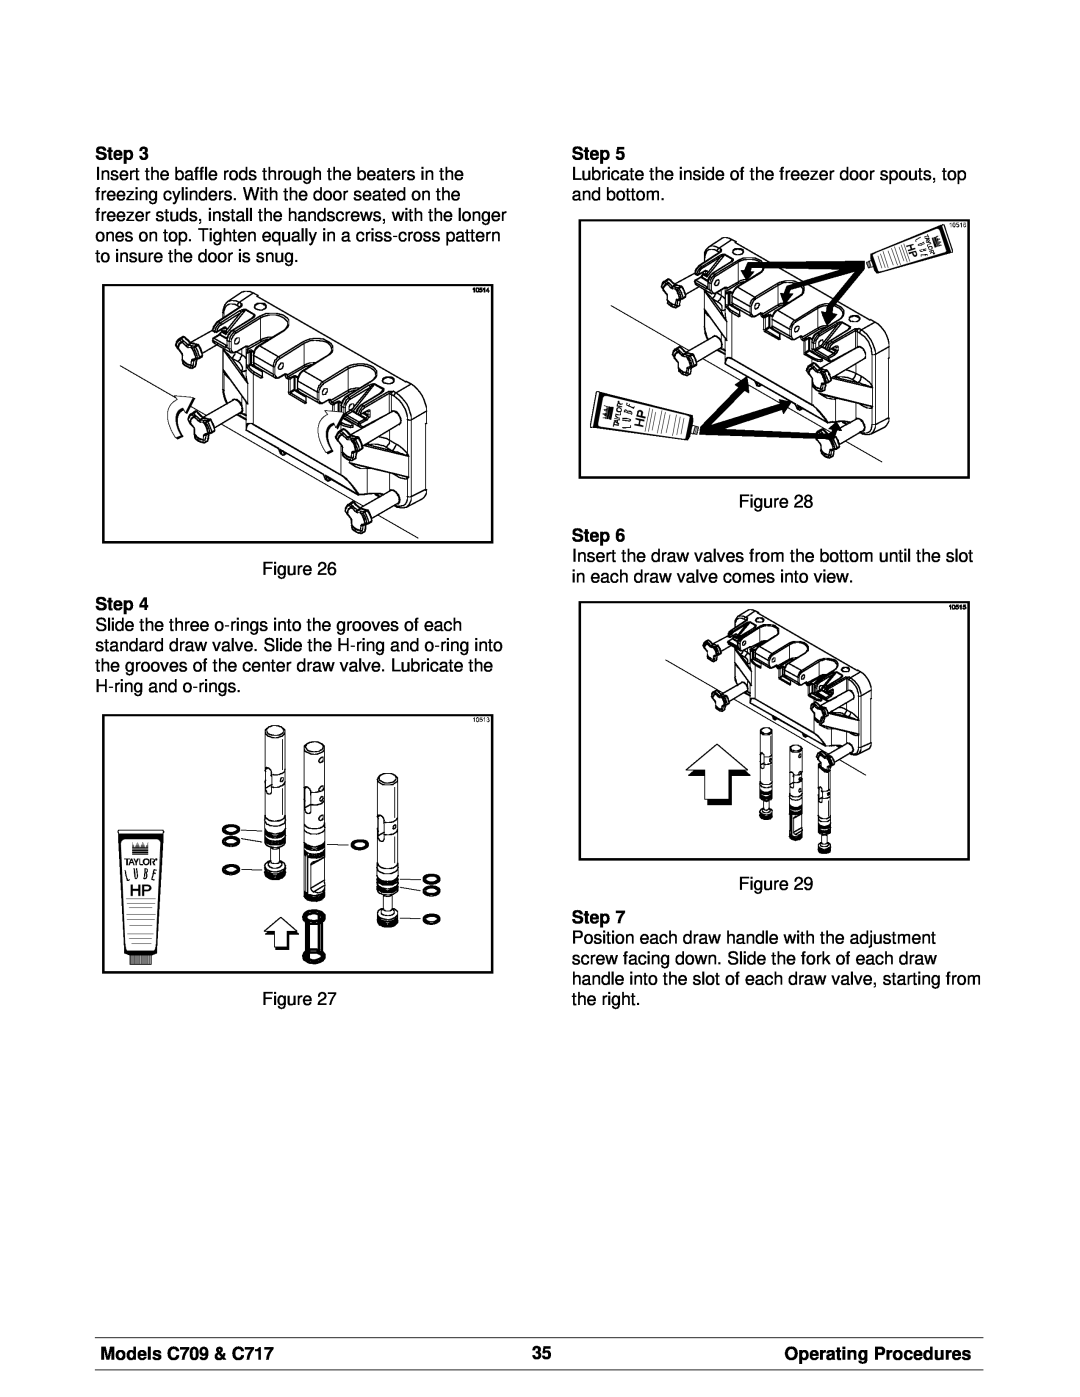 Taylor manual Step, Models C709 & C717, Operating Procedures 